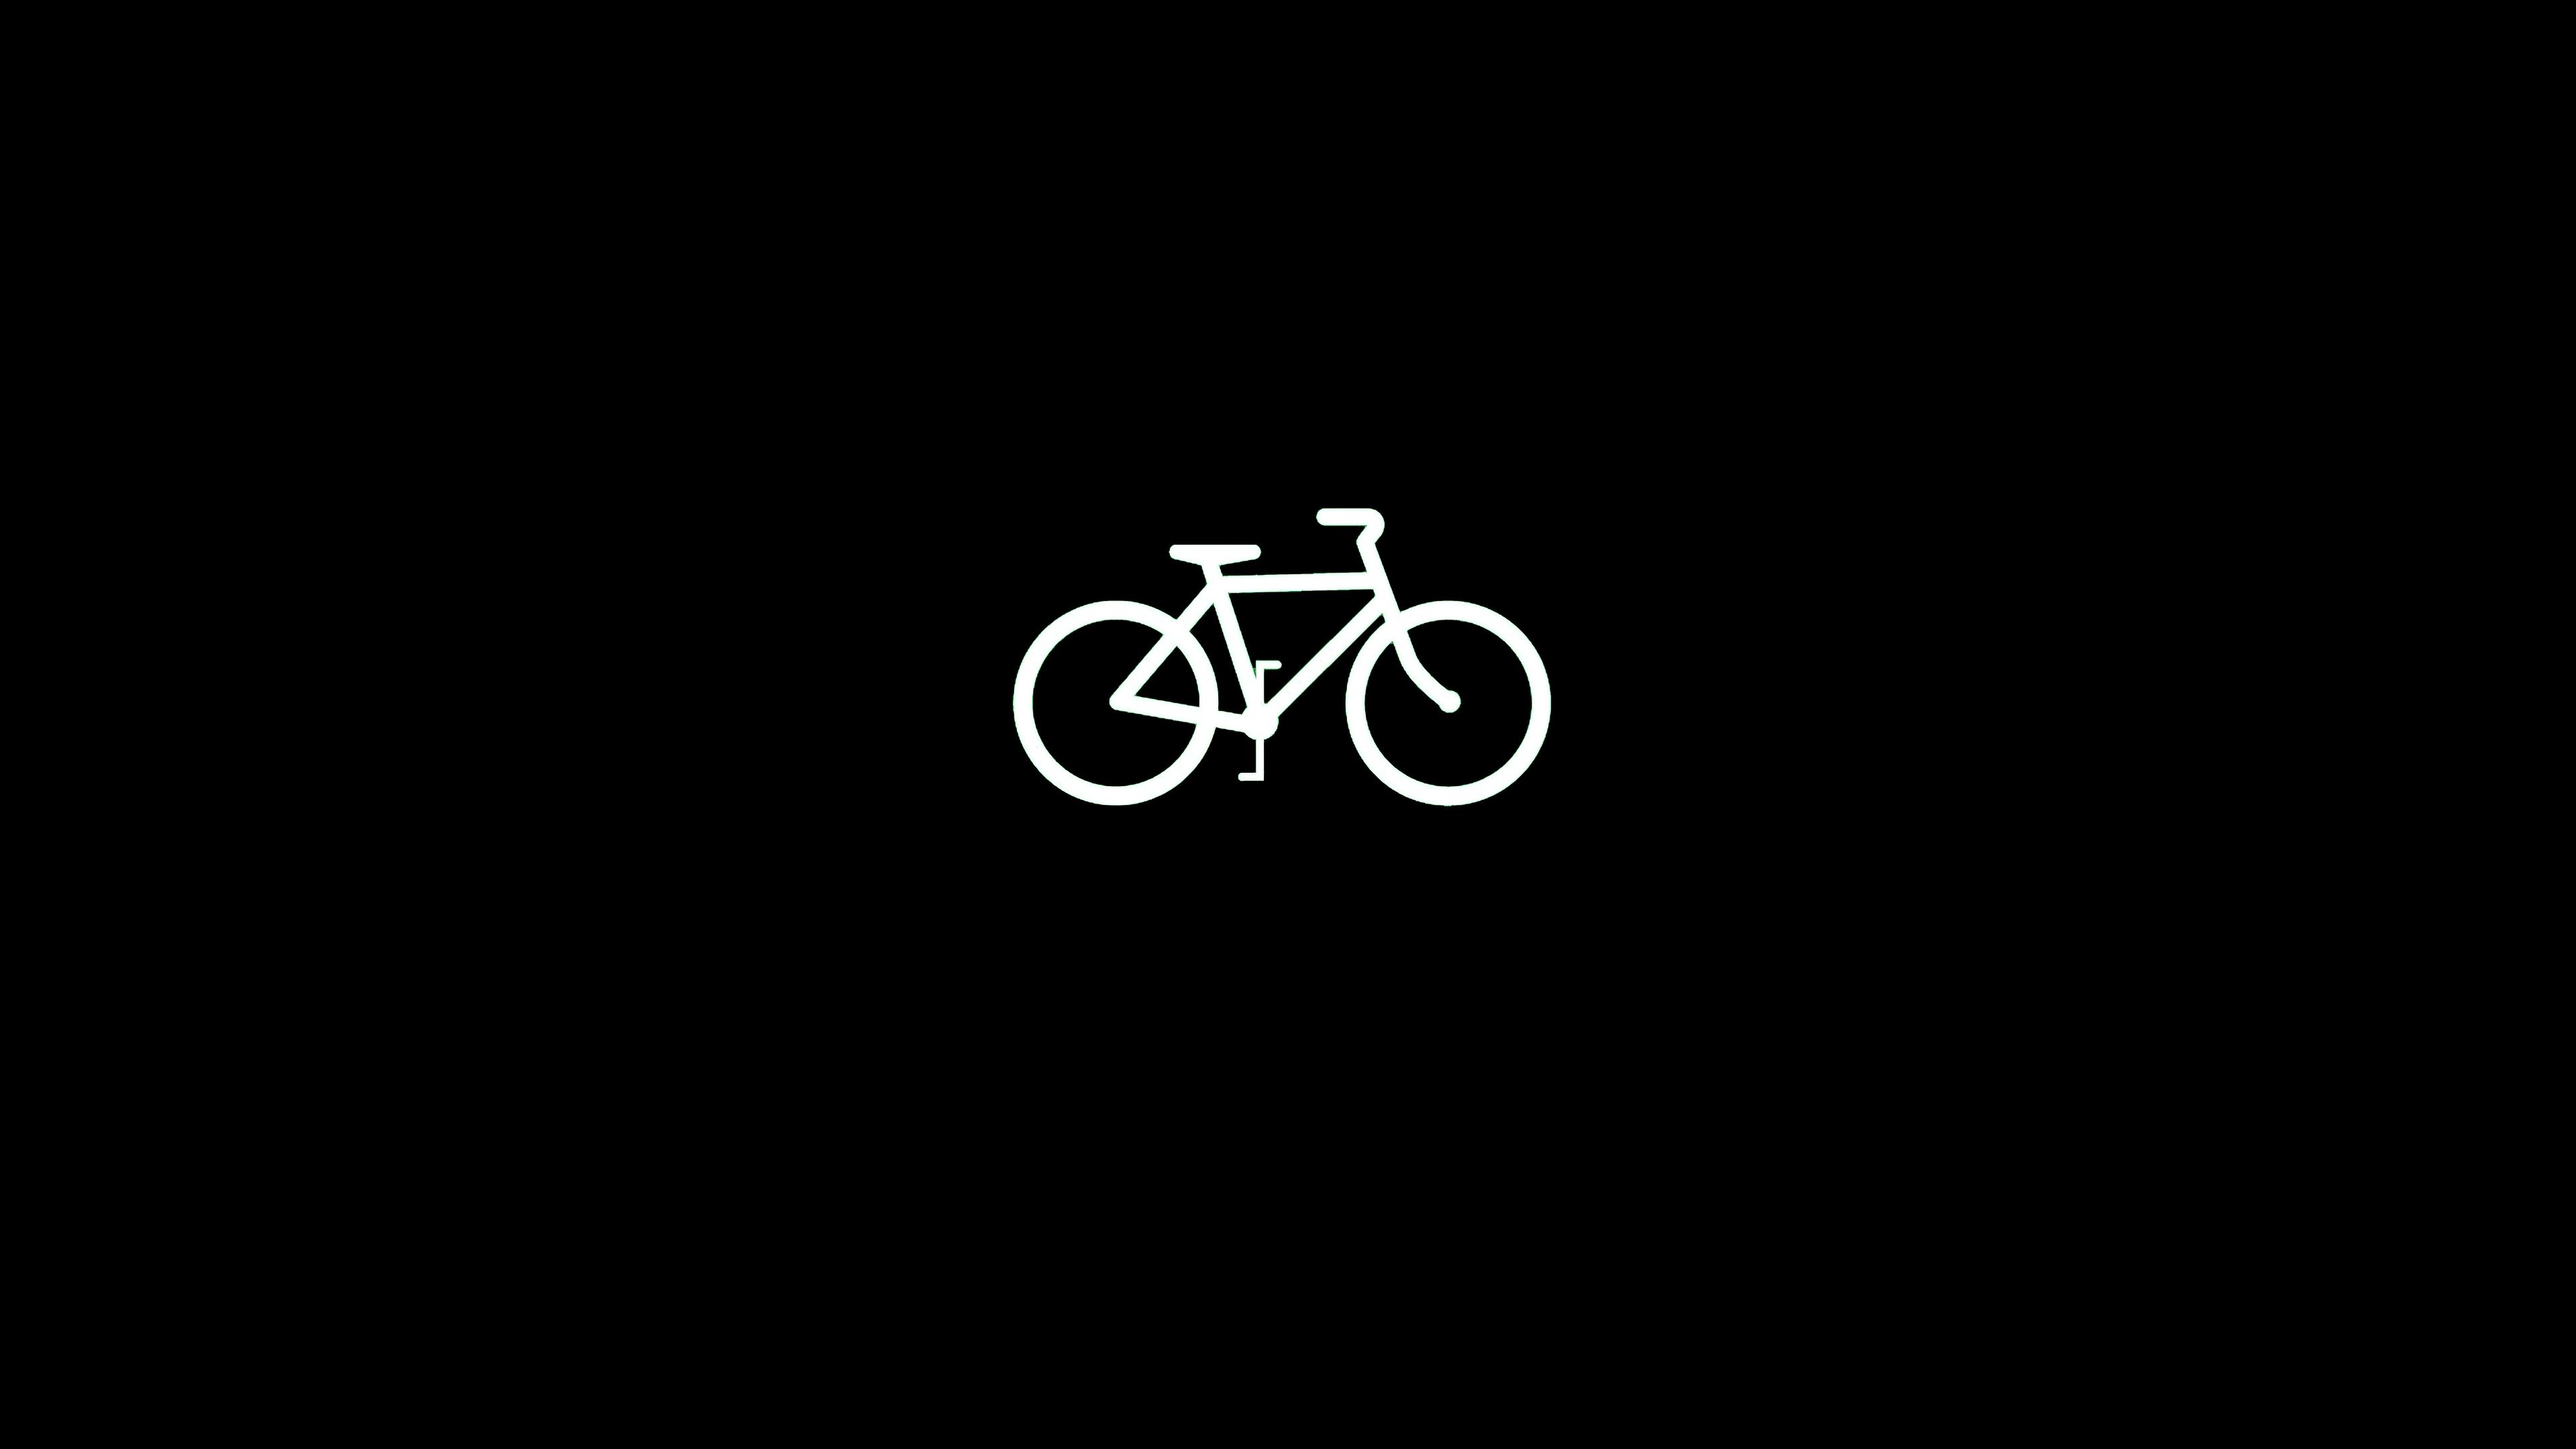 Bicycle Dark Black Minimal 4k, HD Artist, 4k Wallpaper, Image, Background, Photo and Picture